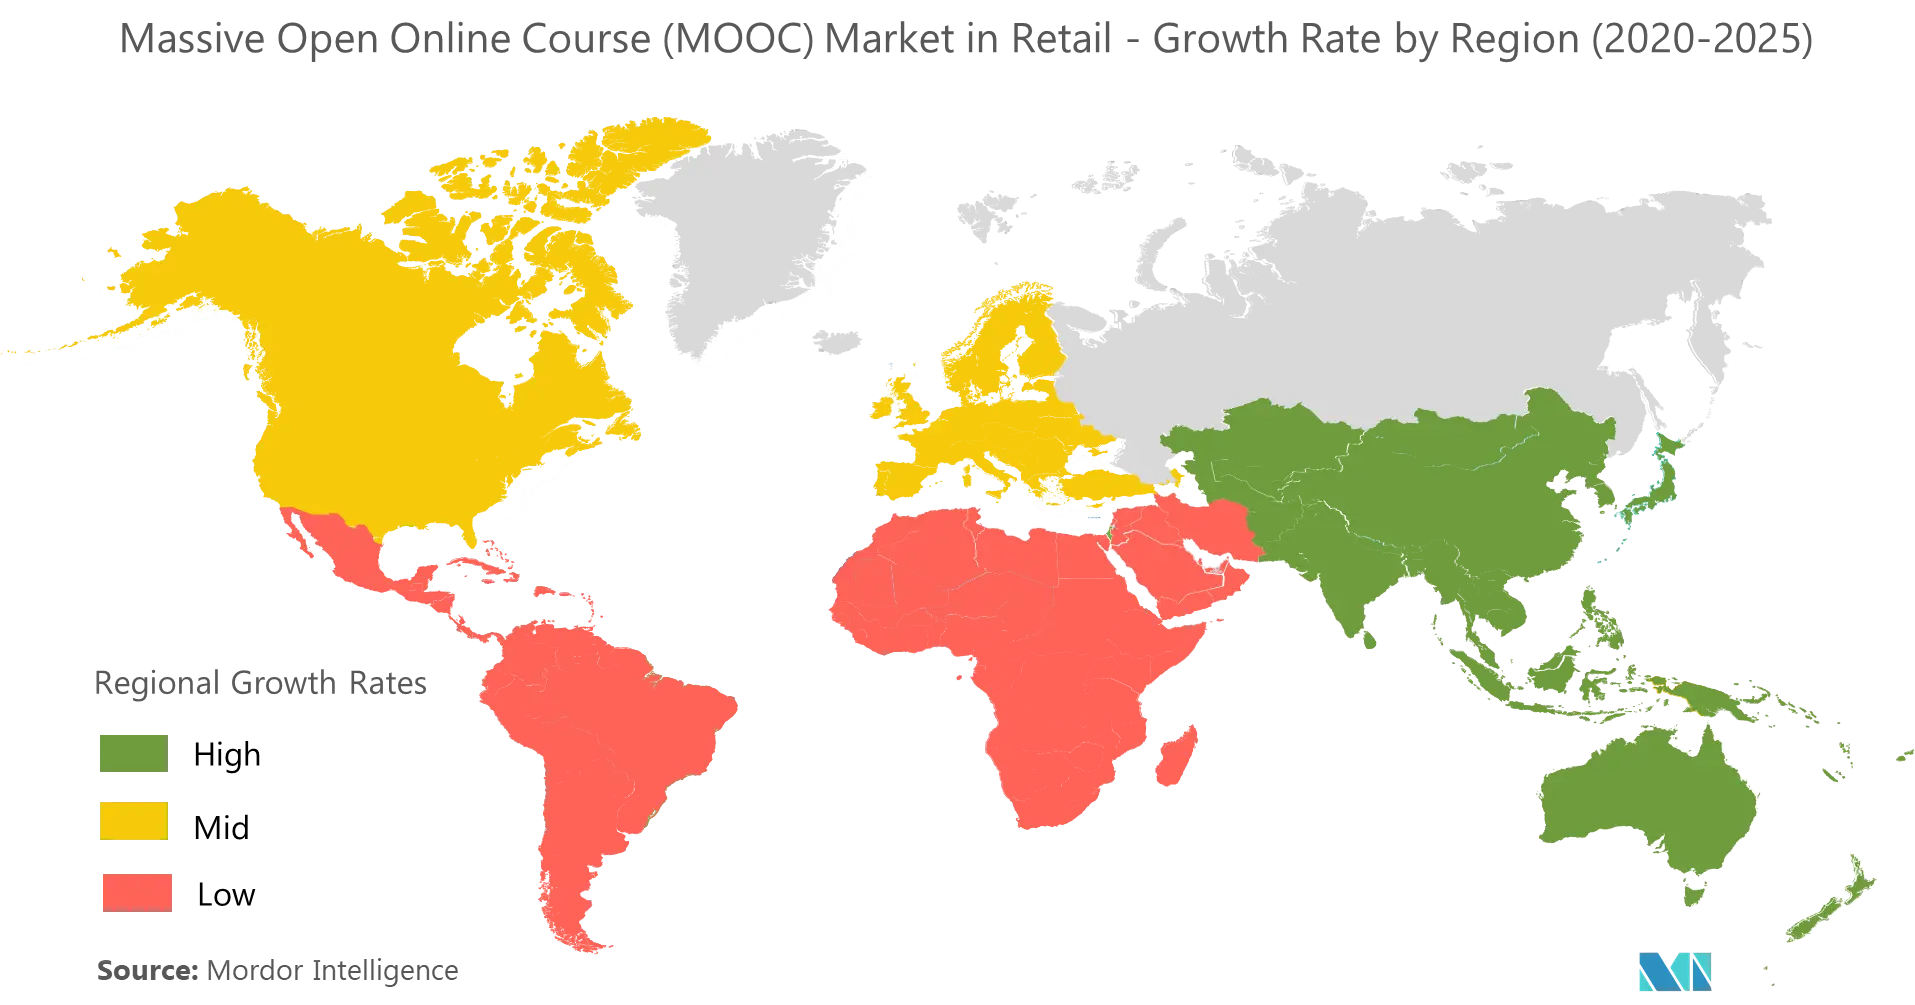 massive open online course (MOOC) market growth